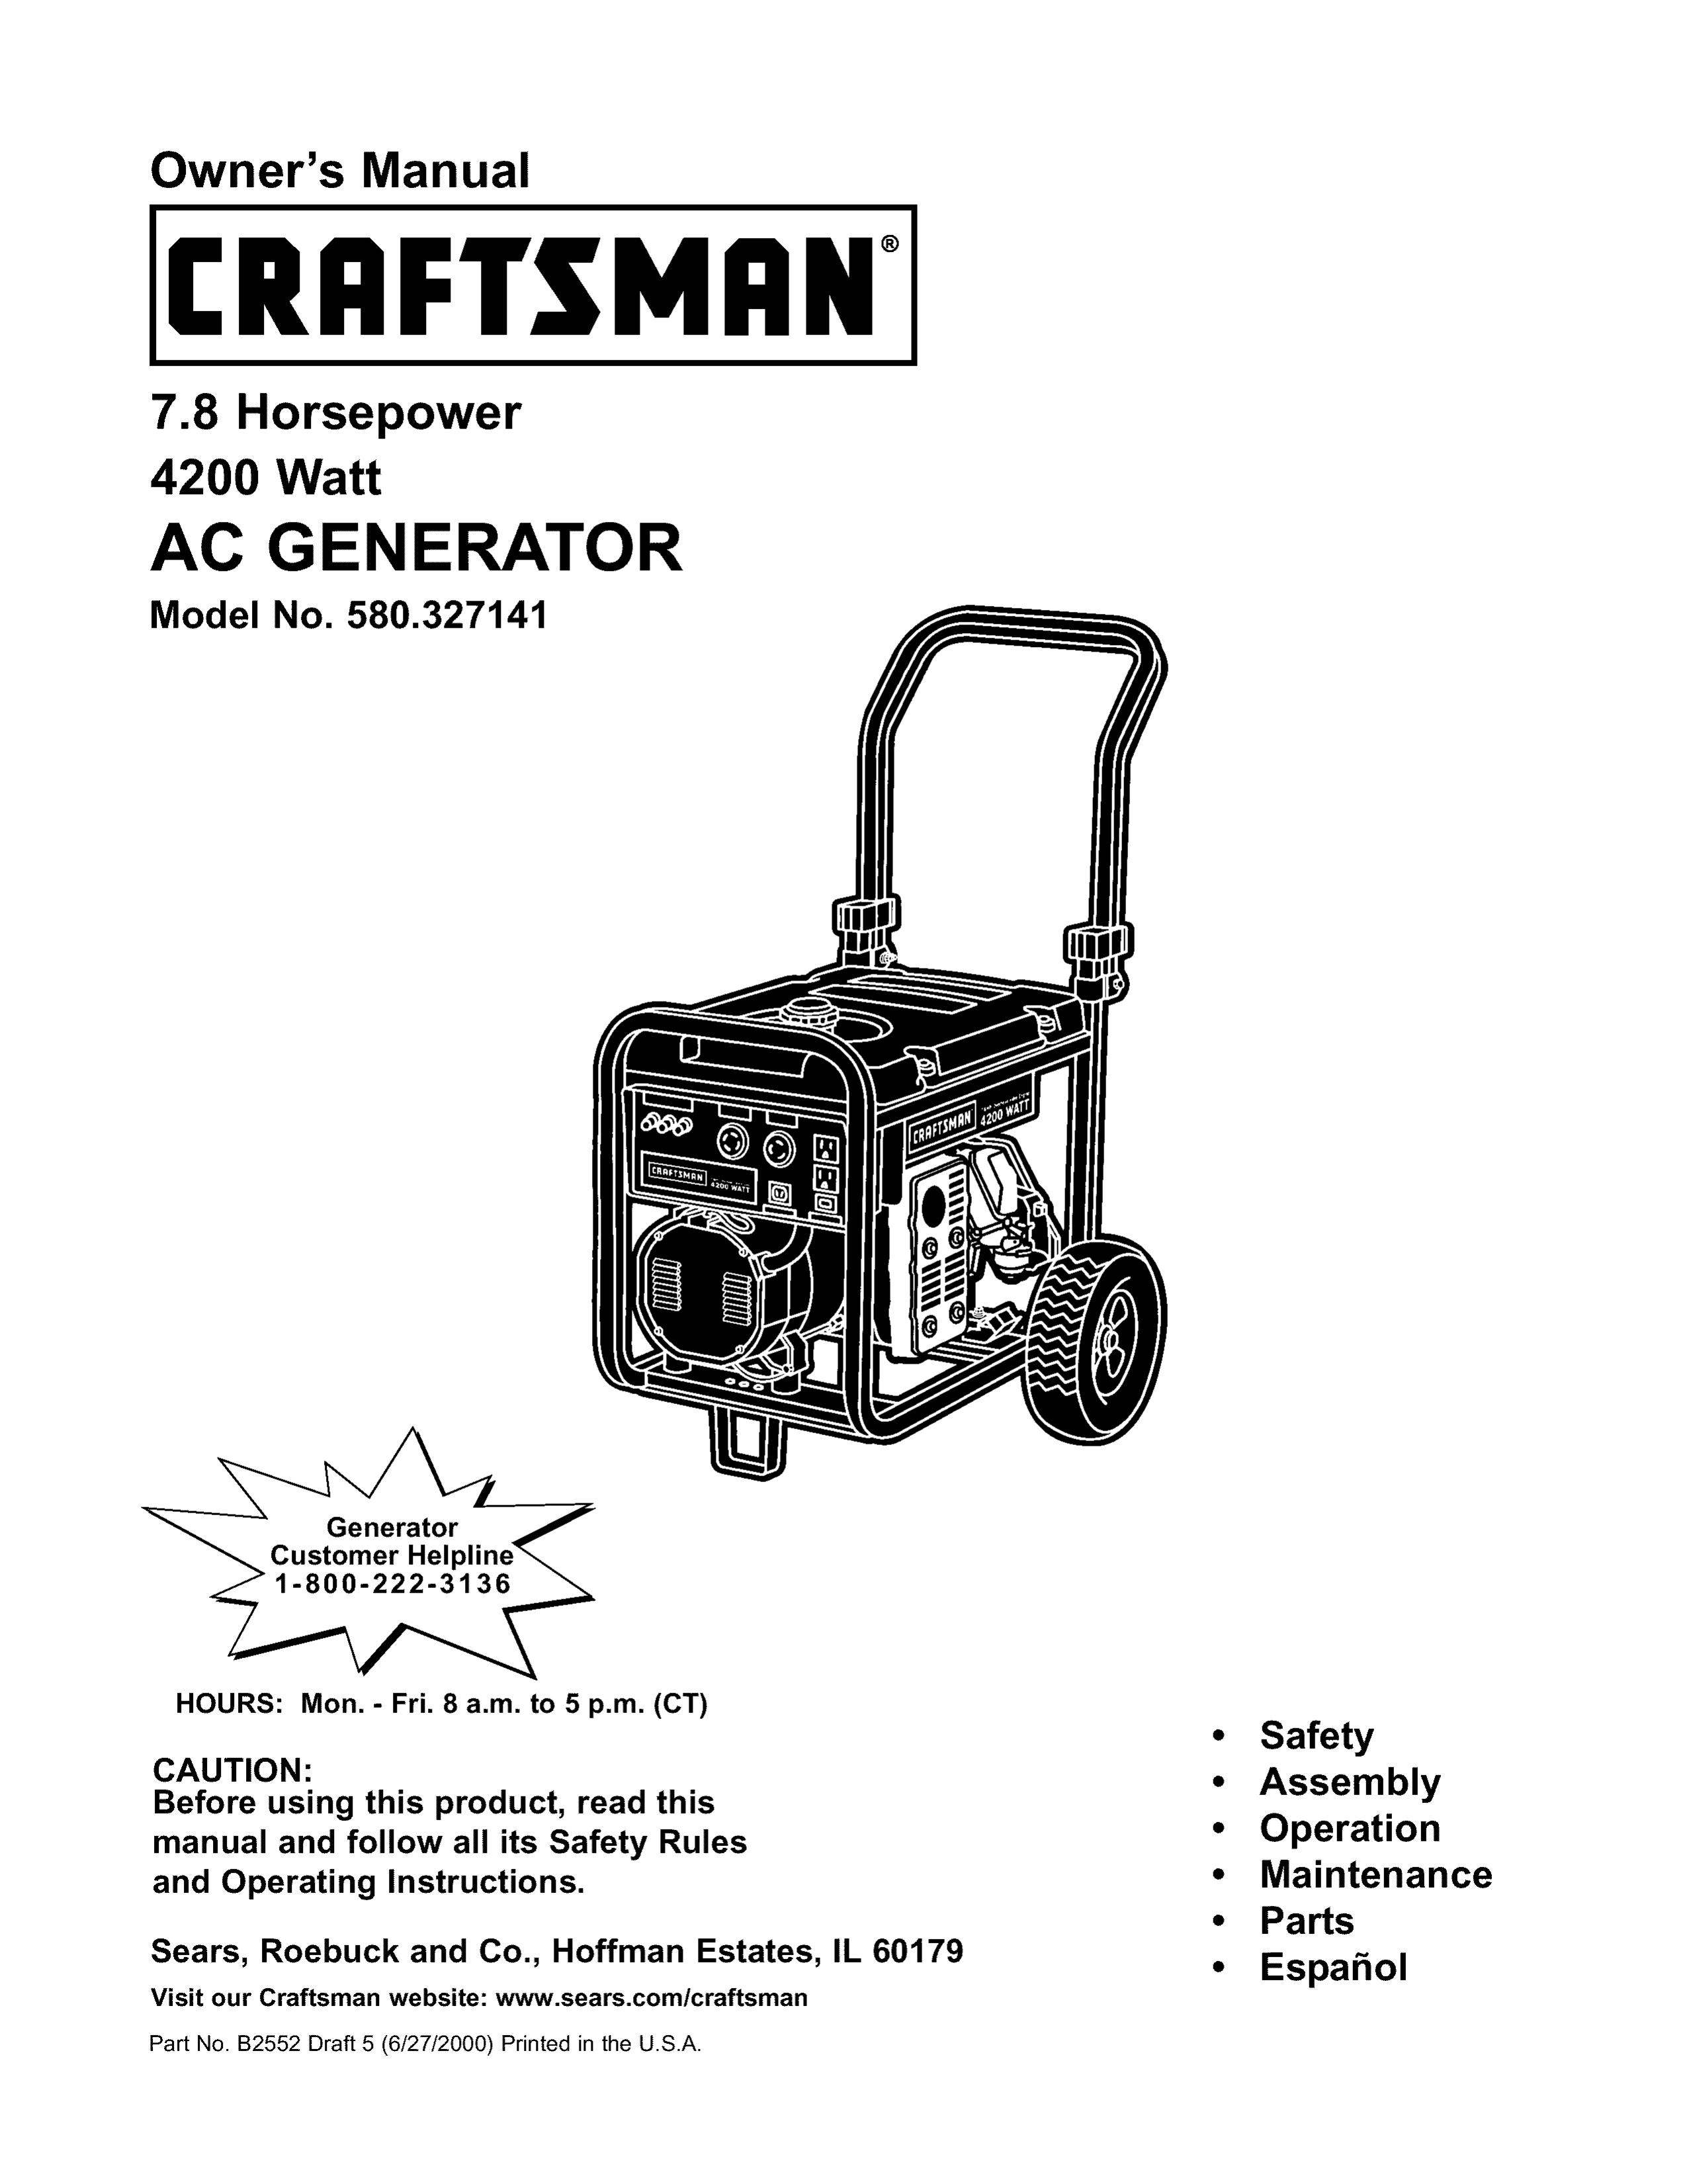 Craftsman 580.327141 Portable Generator User Manual